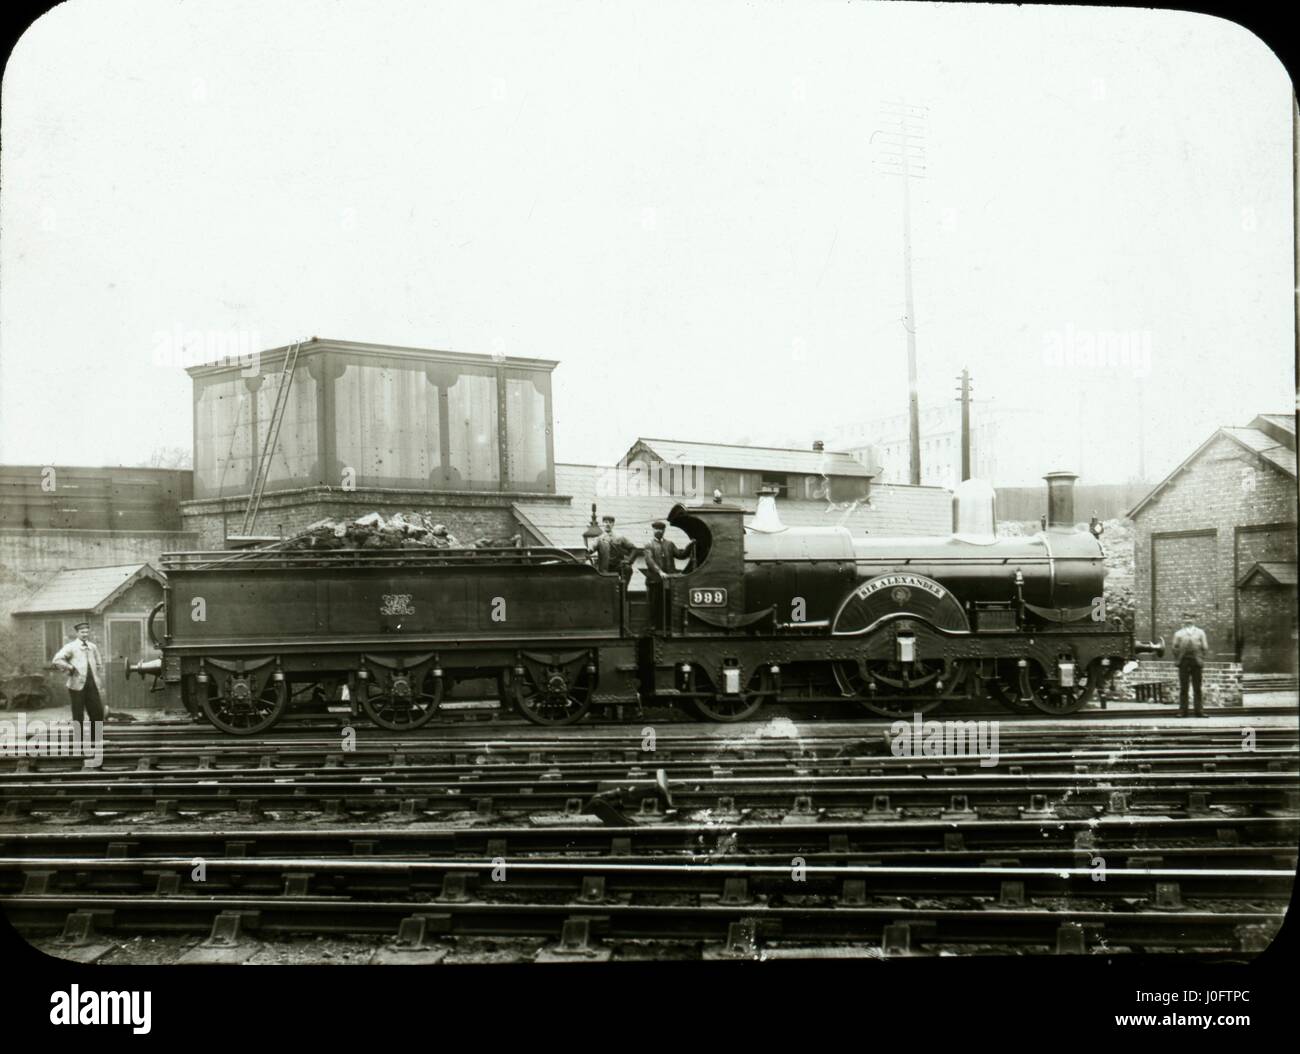 Locomotive 999 'Sir Alexander' Stock Photo